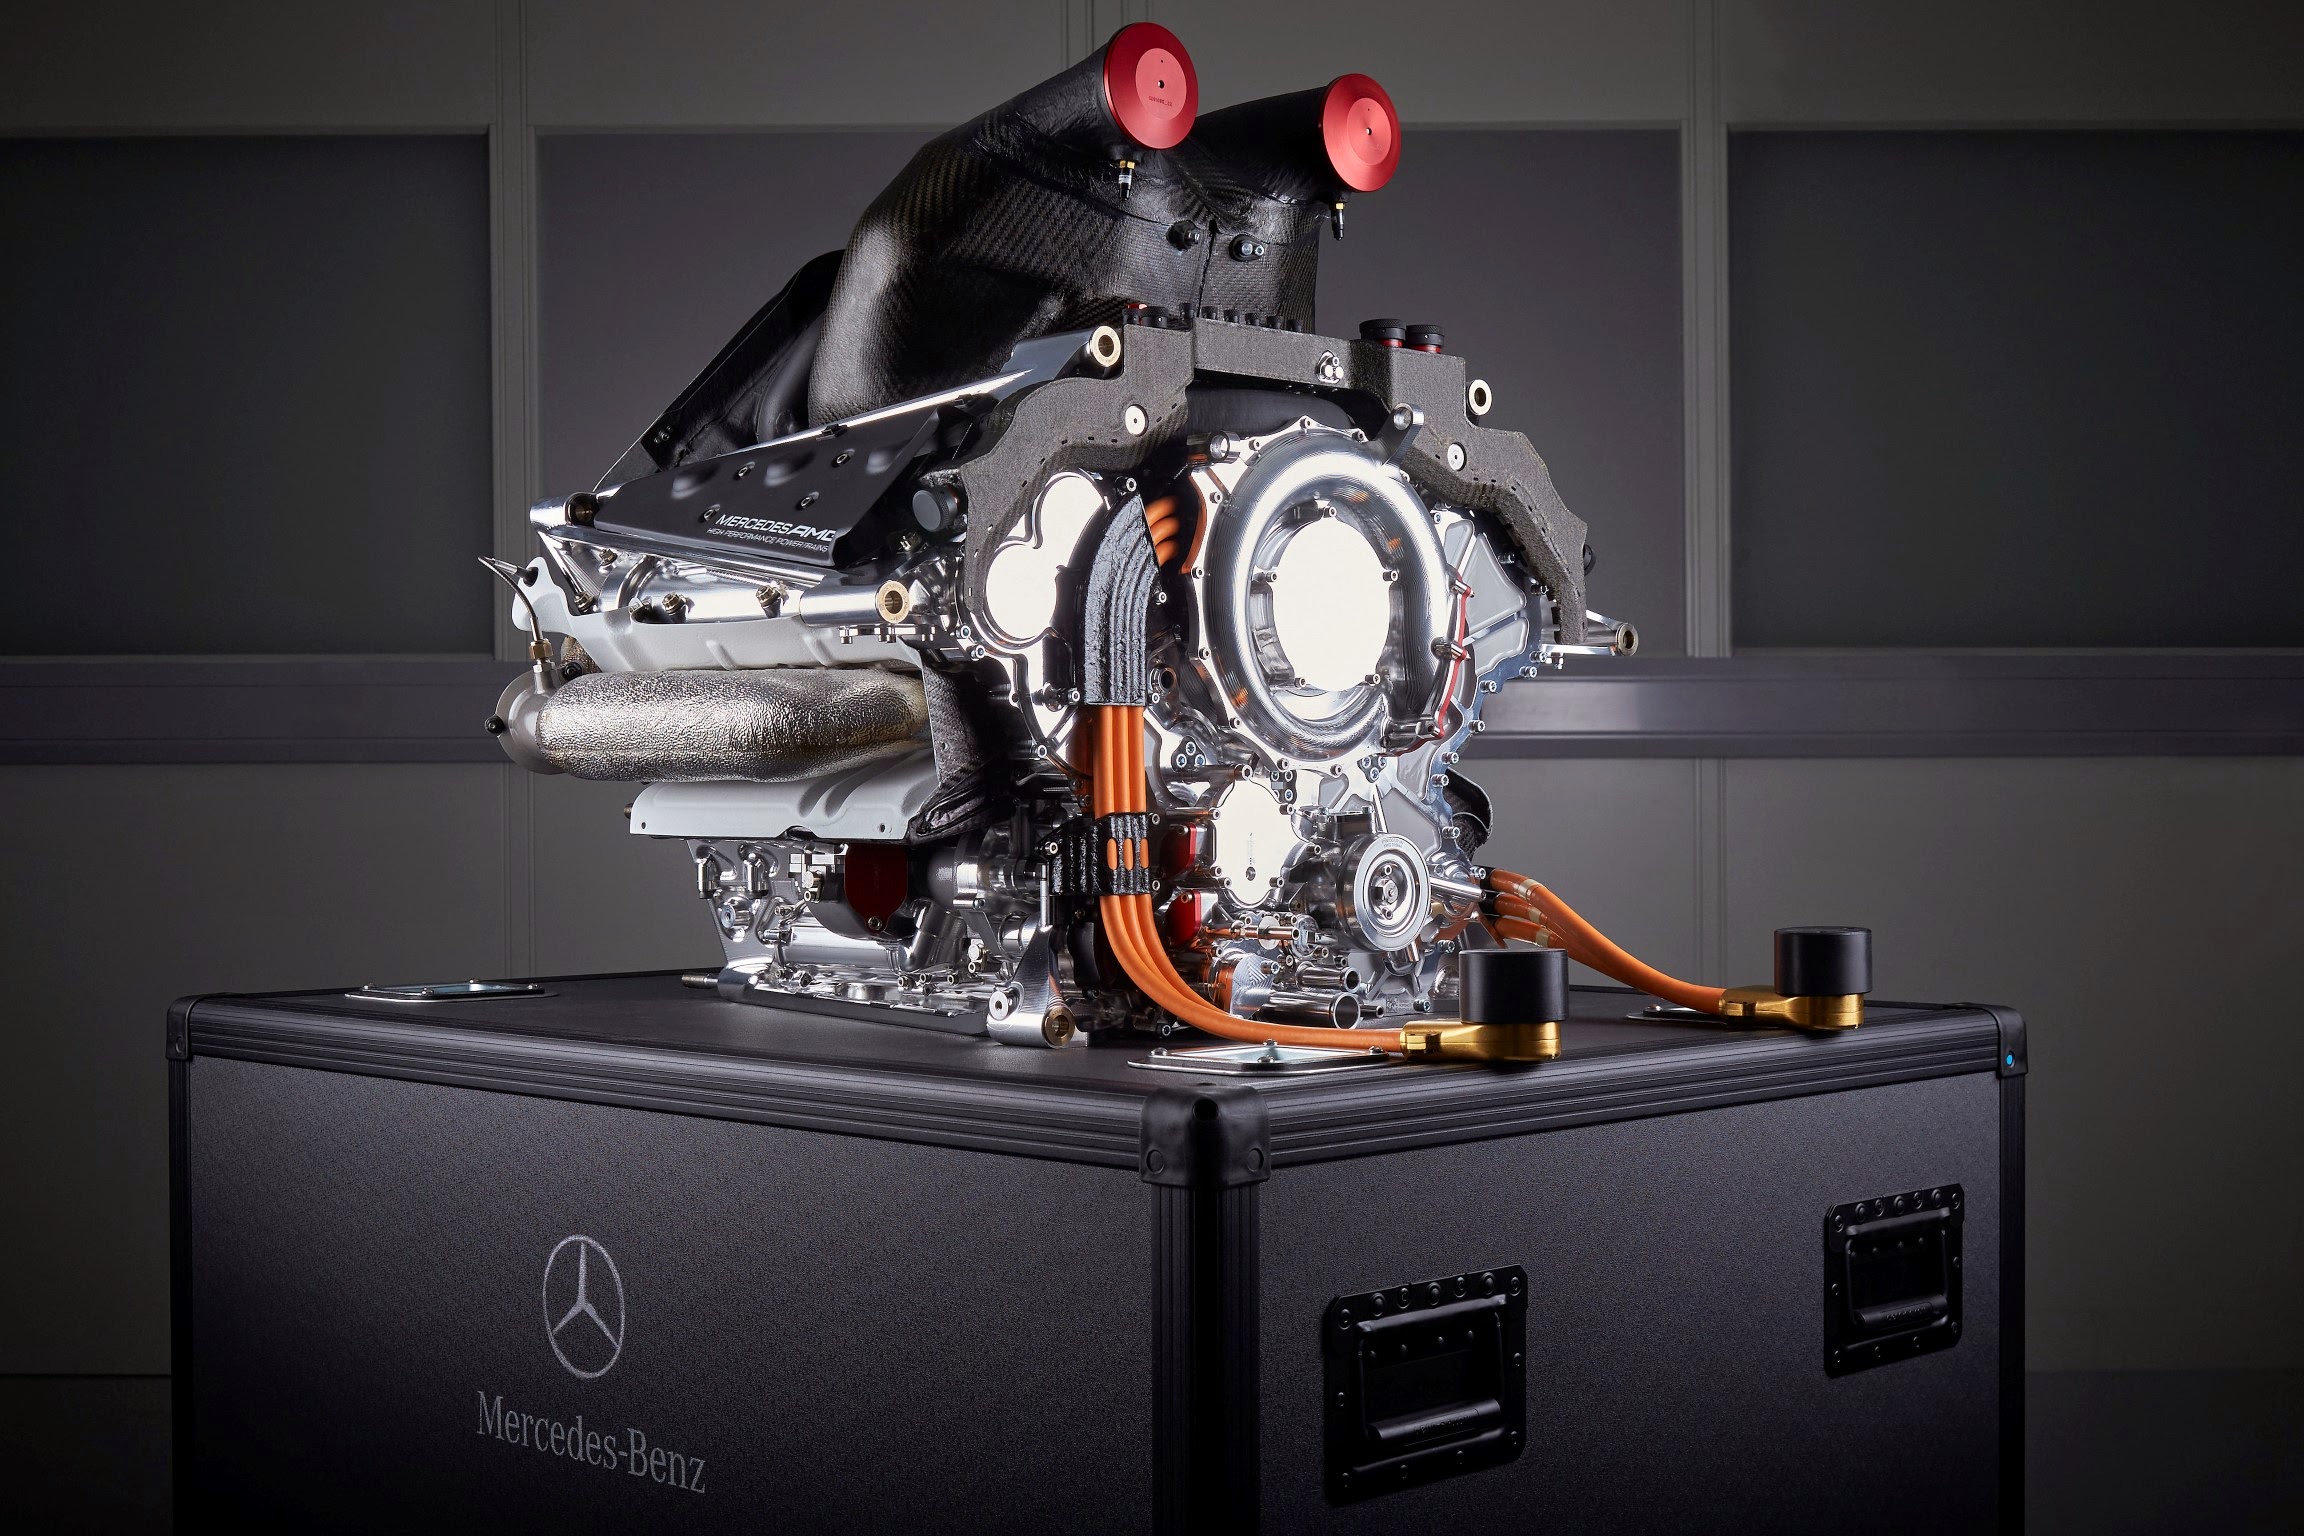 Mercedes F1 W06 is Bringing Its Enhanced Engine to Canada